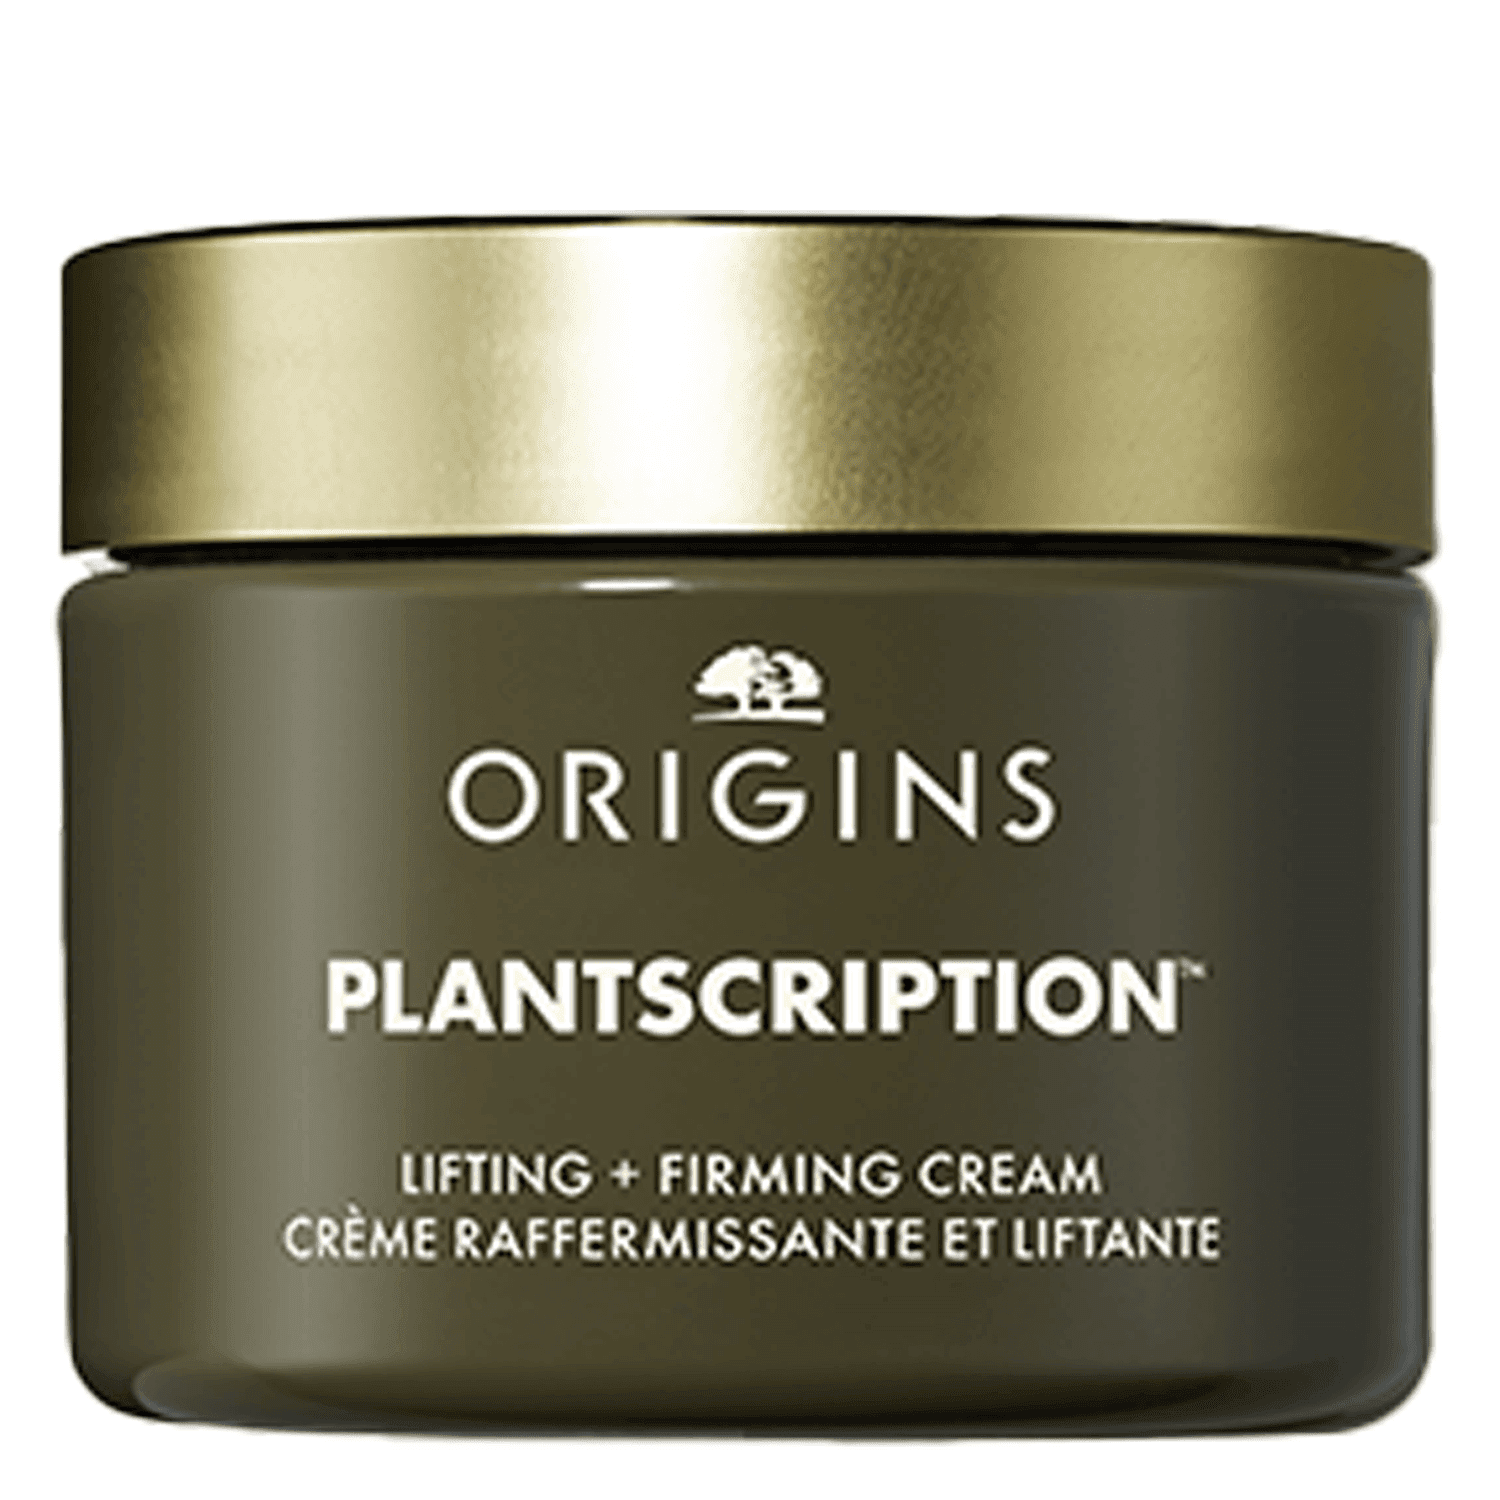 Origins Plantscription - Lifting + Firming Cream